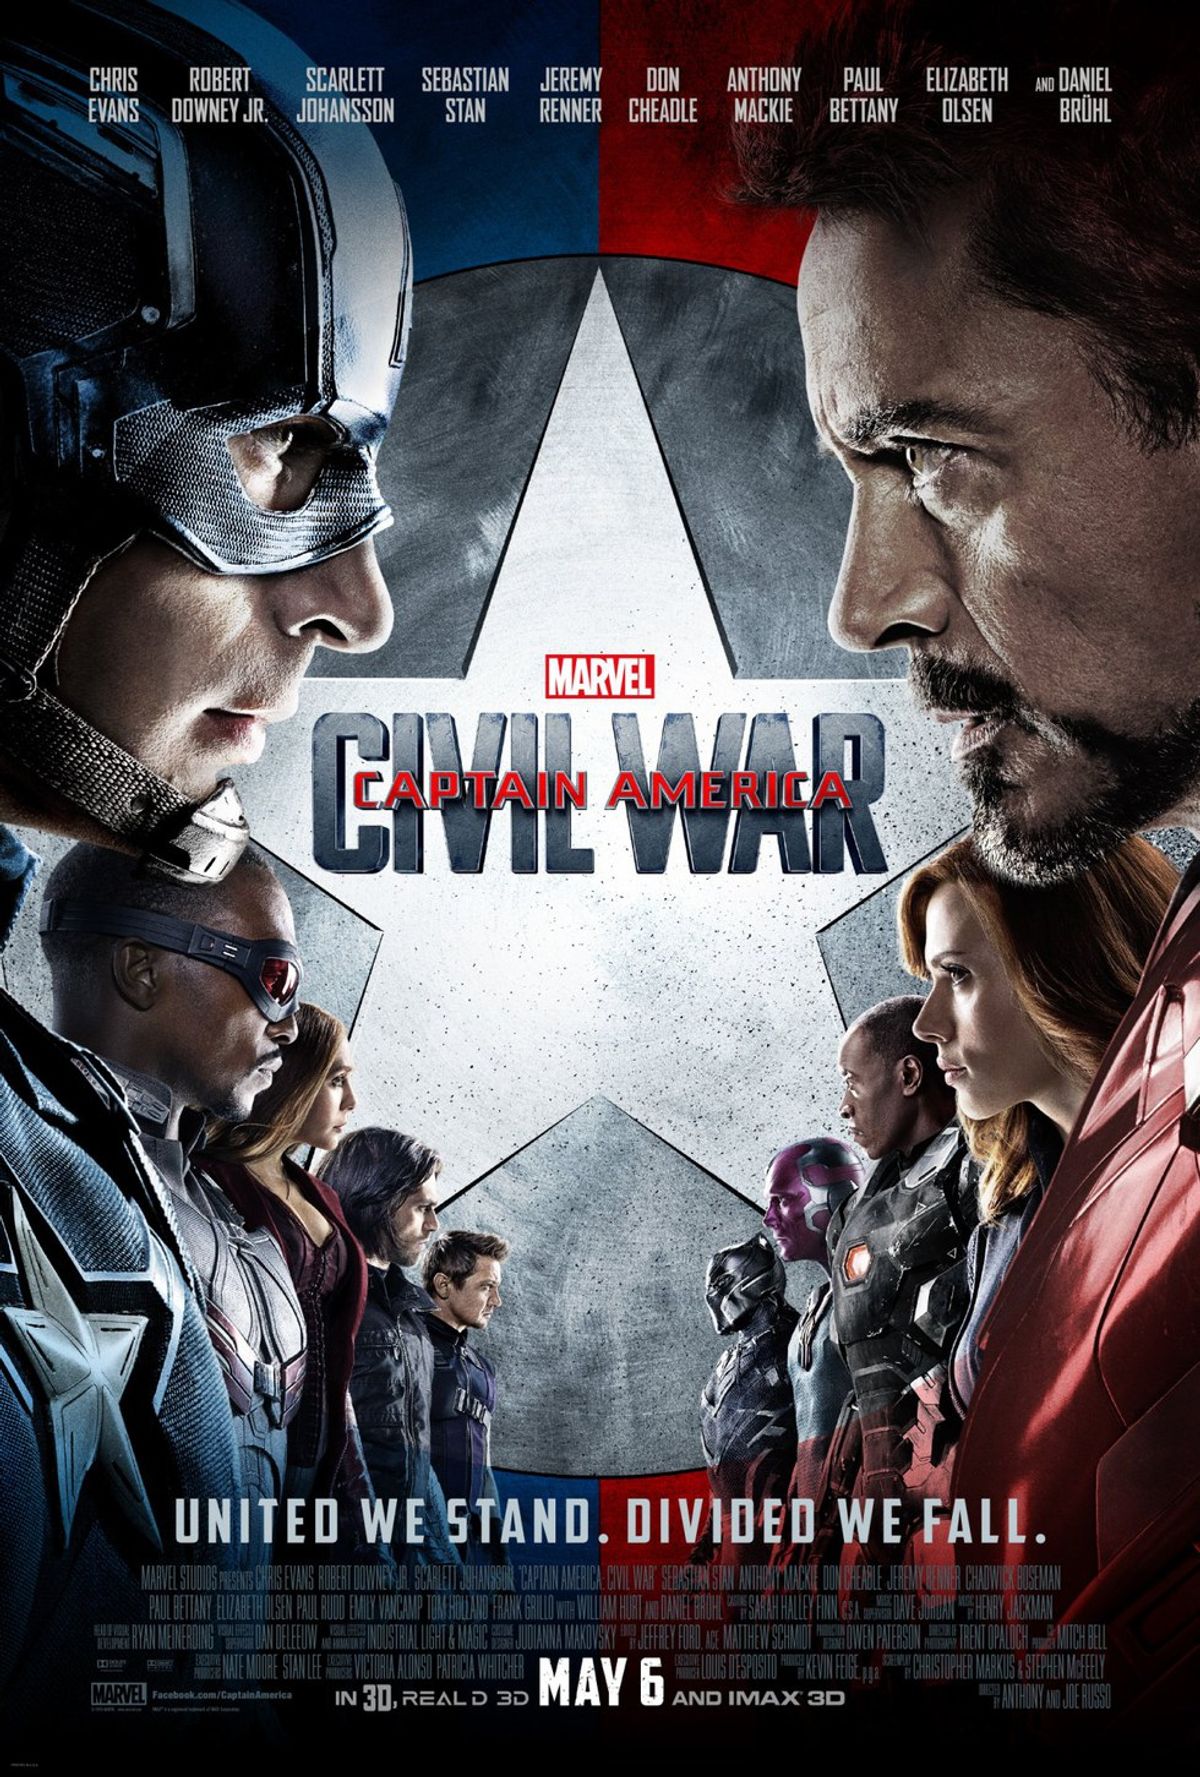 Captain America V. Iron Man: The Ultimate Showdown Of Power